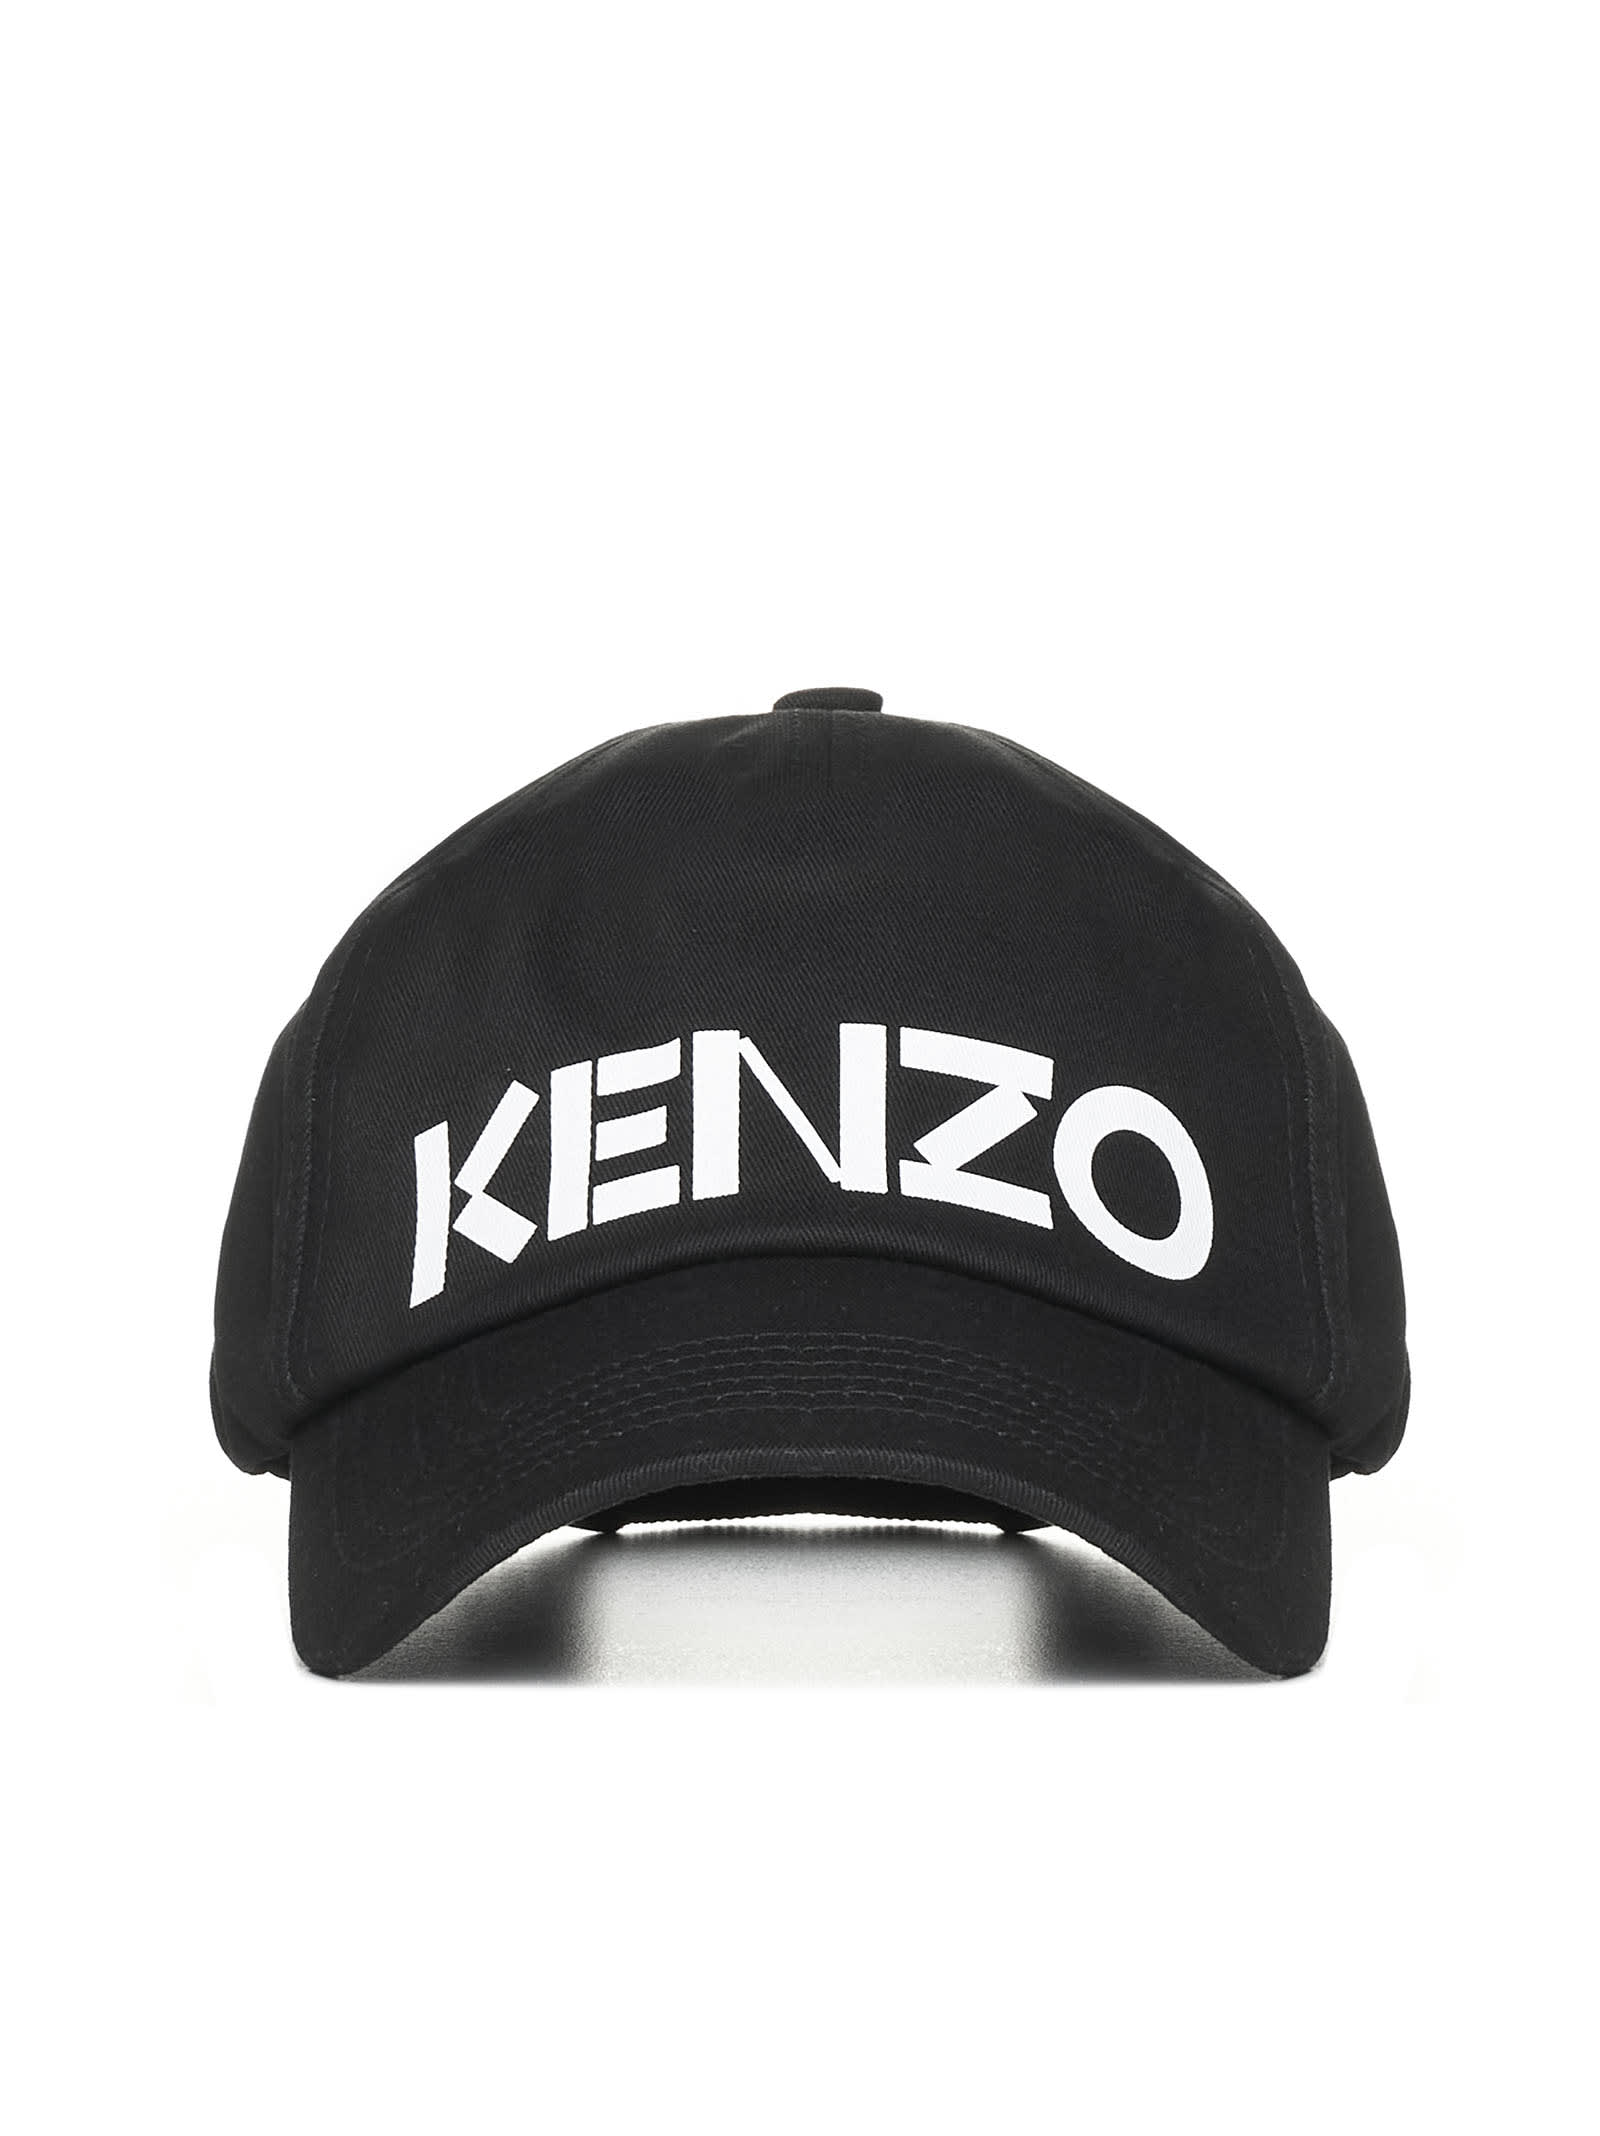 KENZO BLACK CANVAS HAT